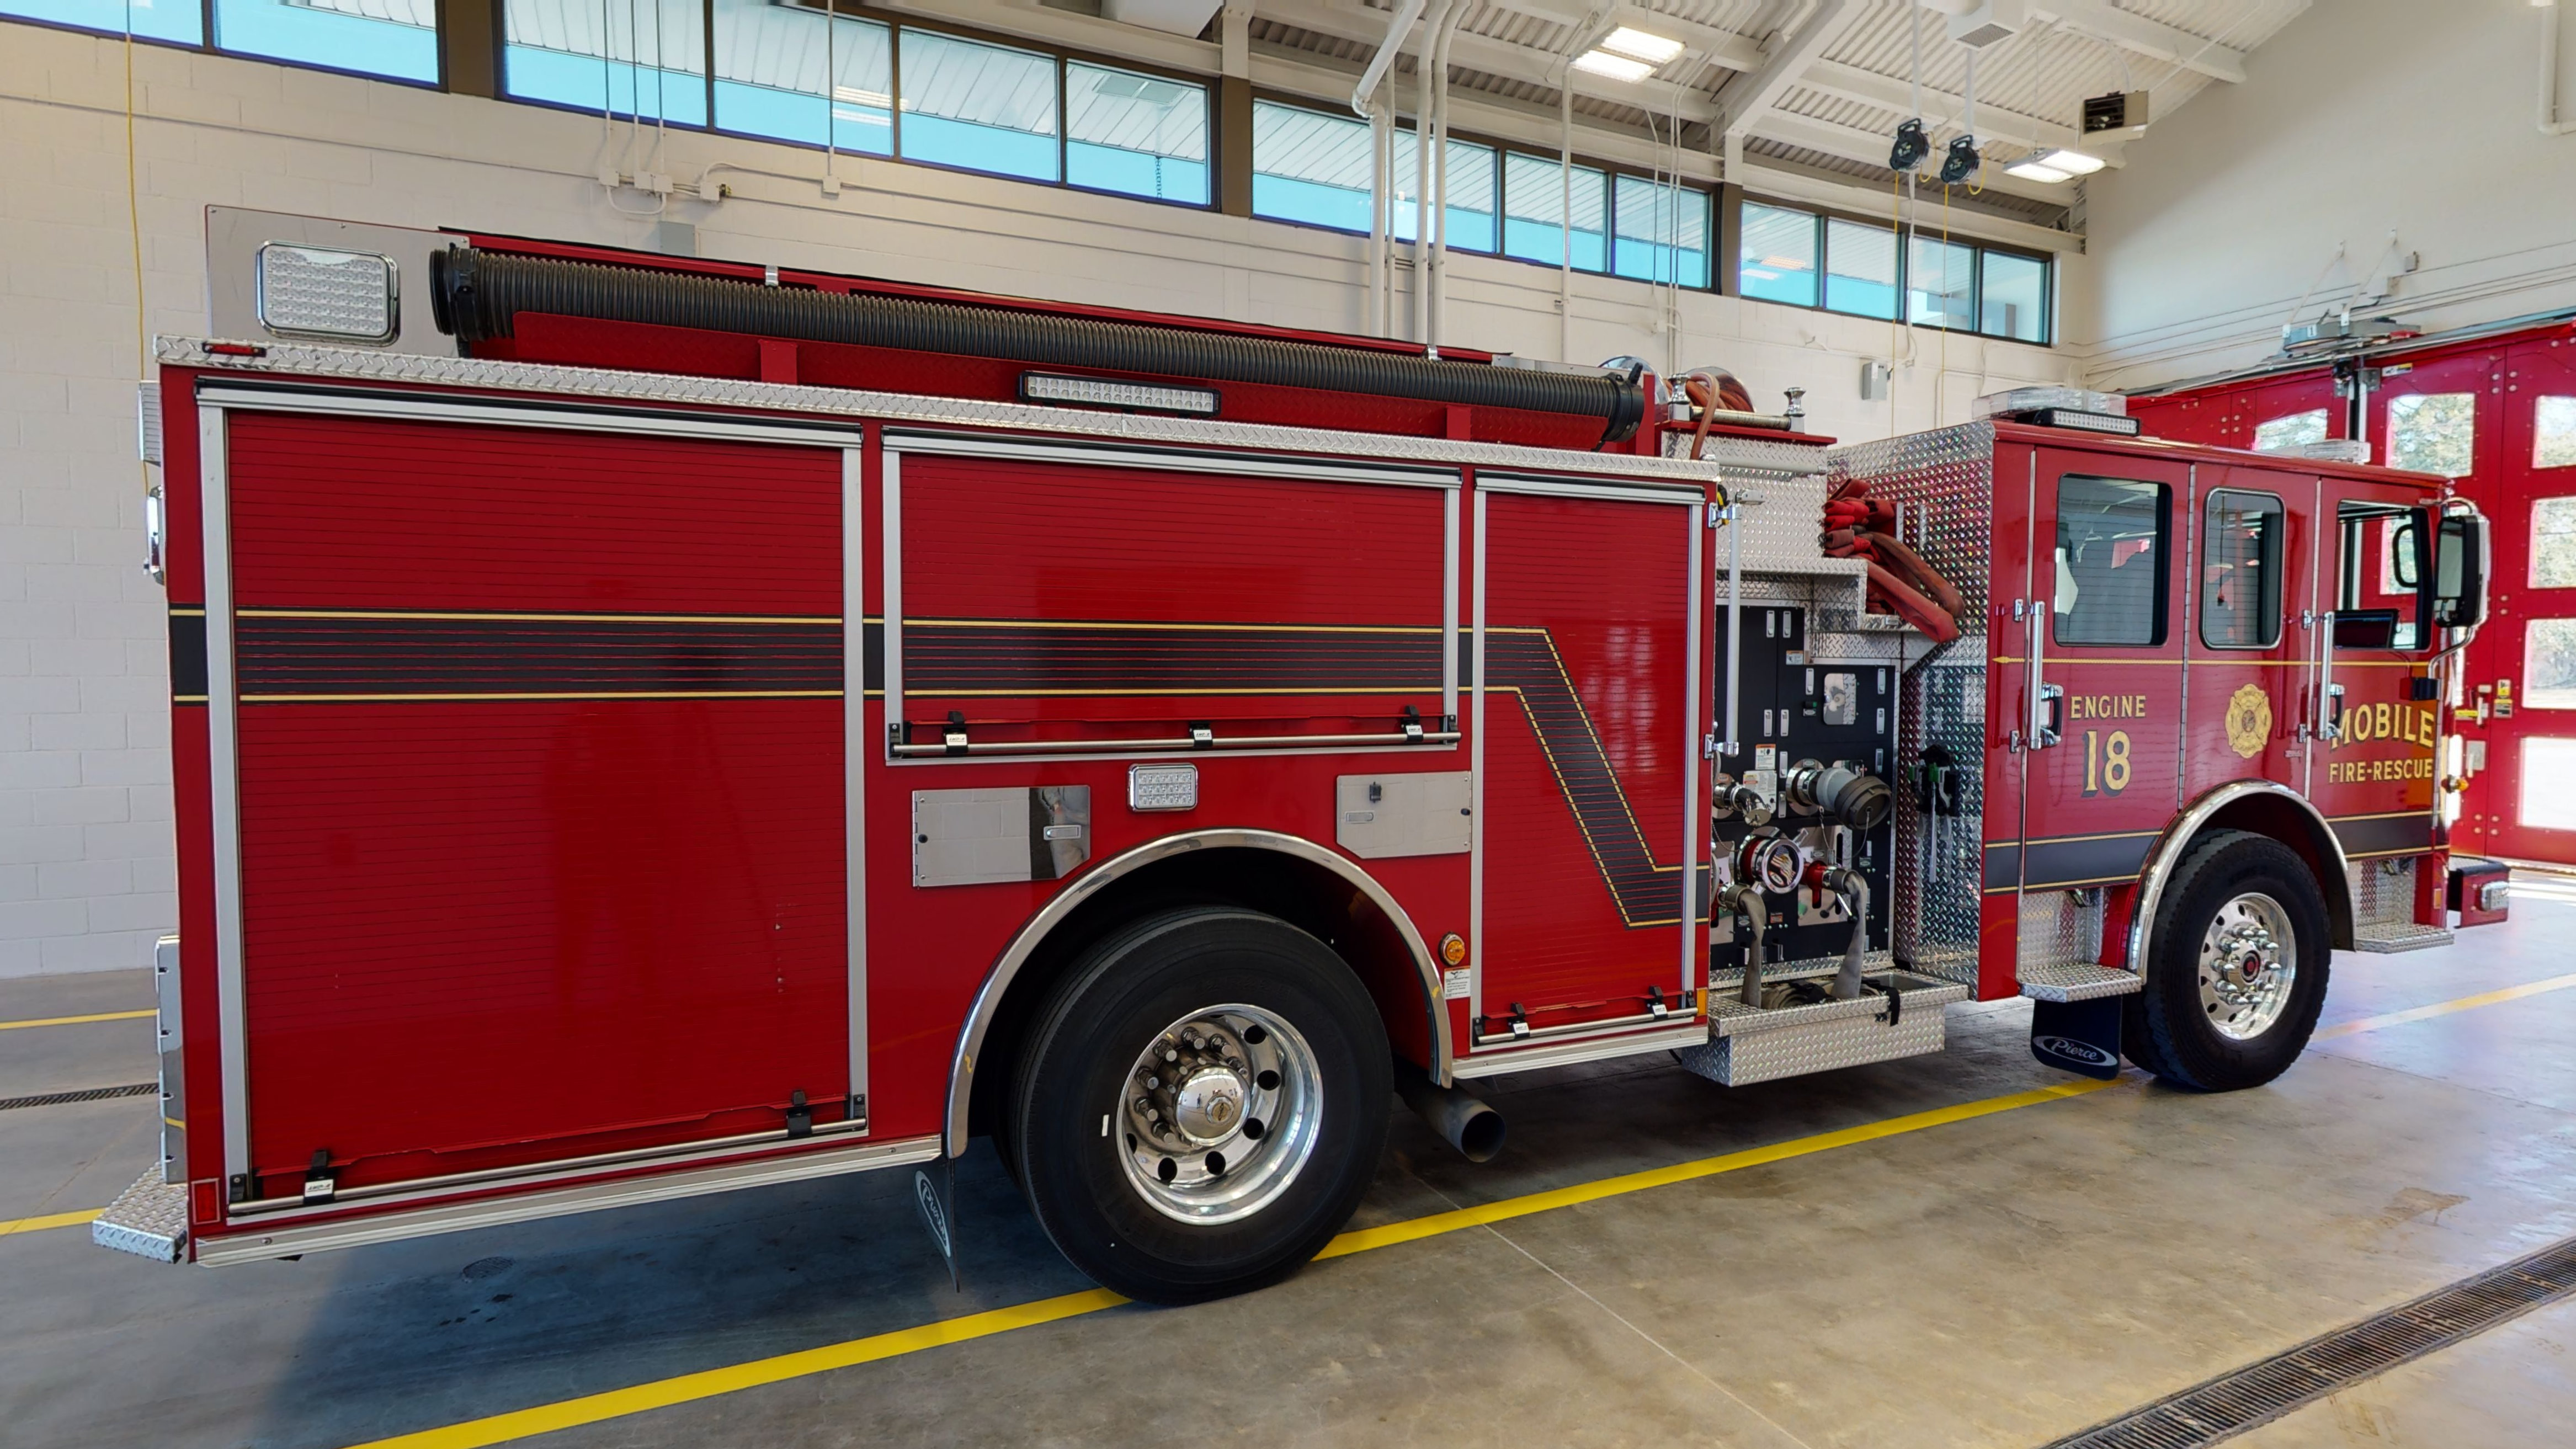 Mobile-Fire-Rescue-Engine-18-06182021_140935